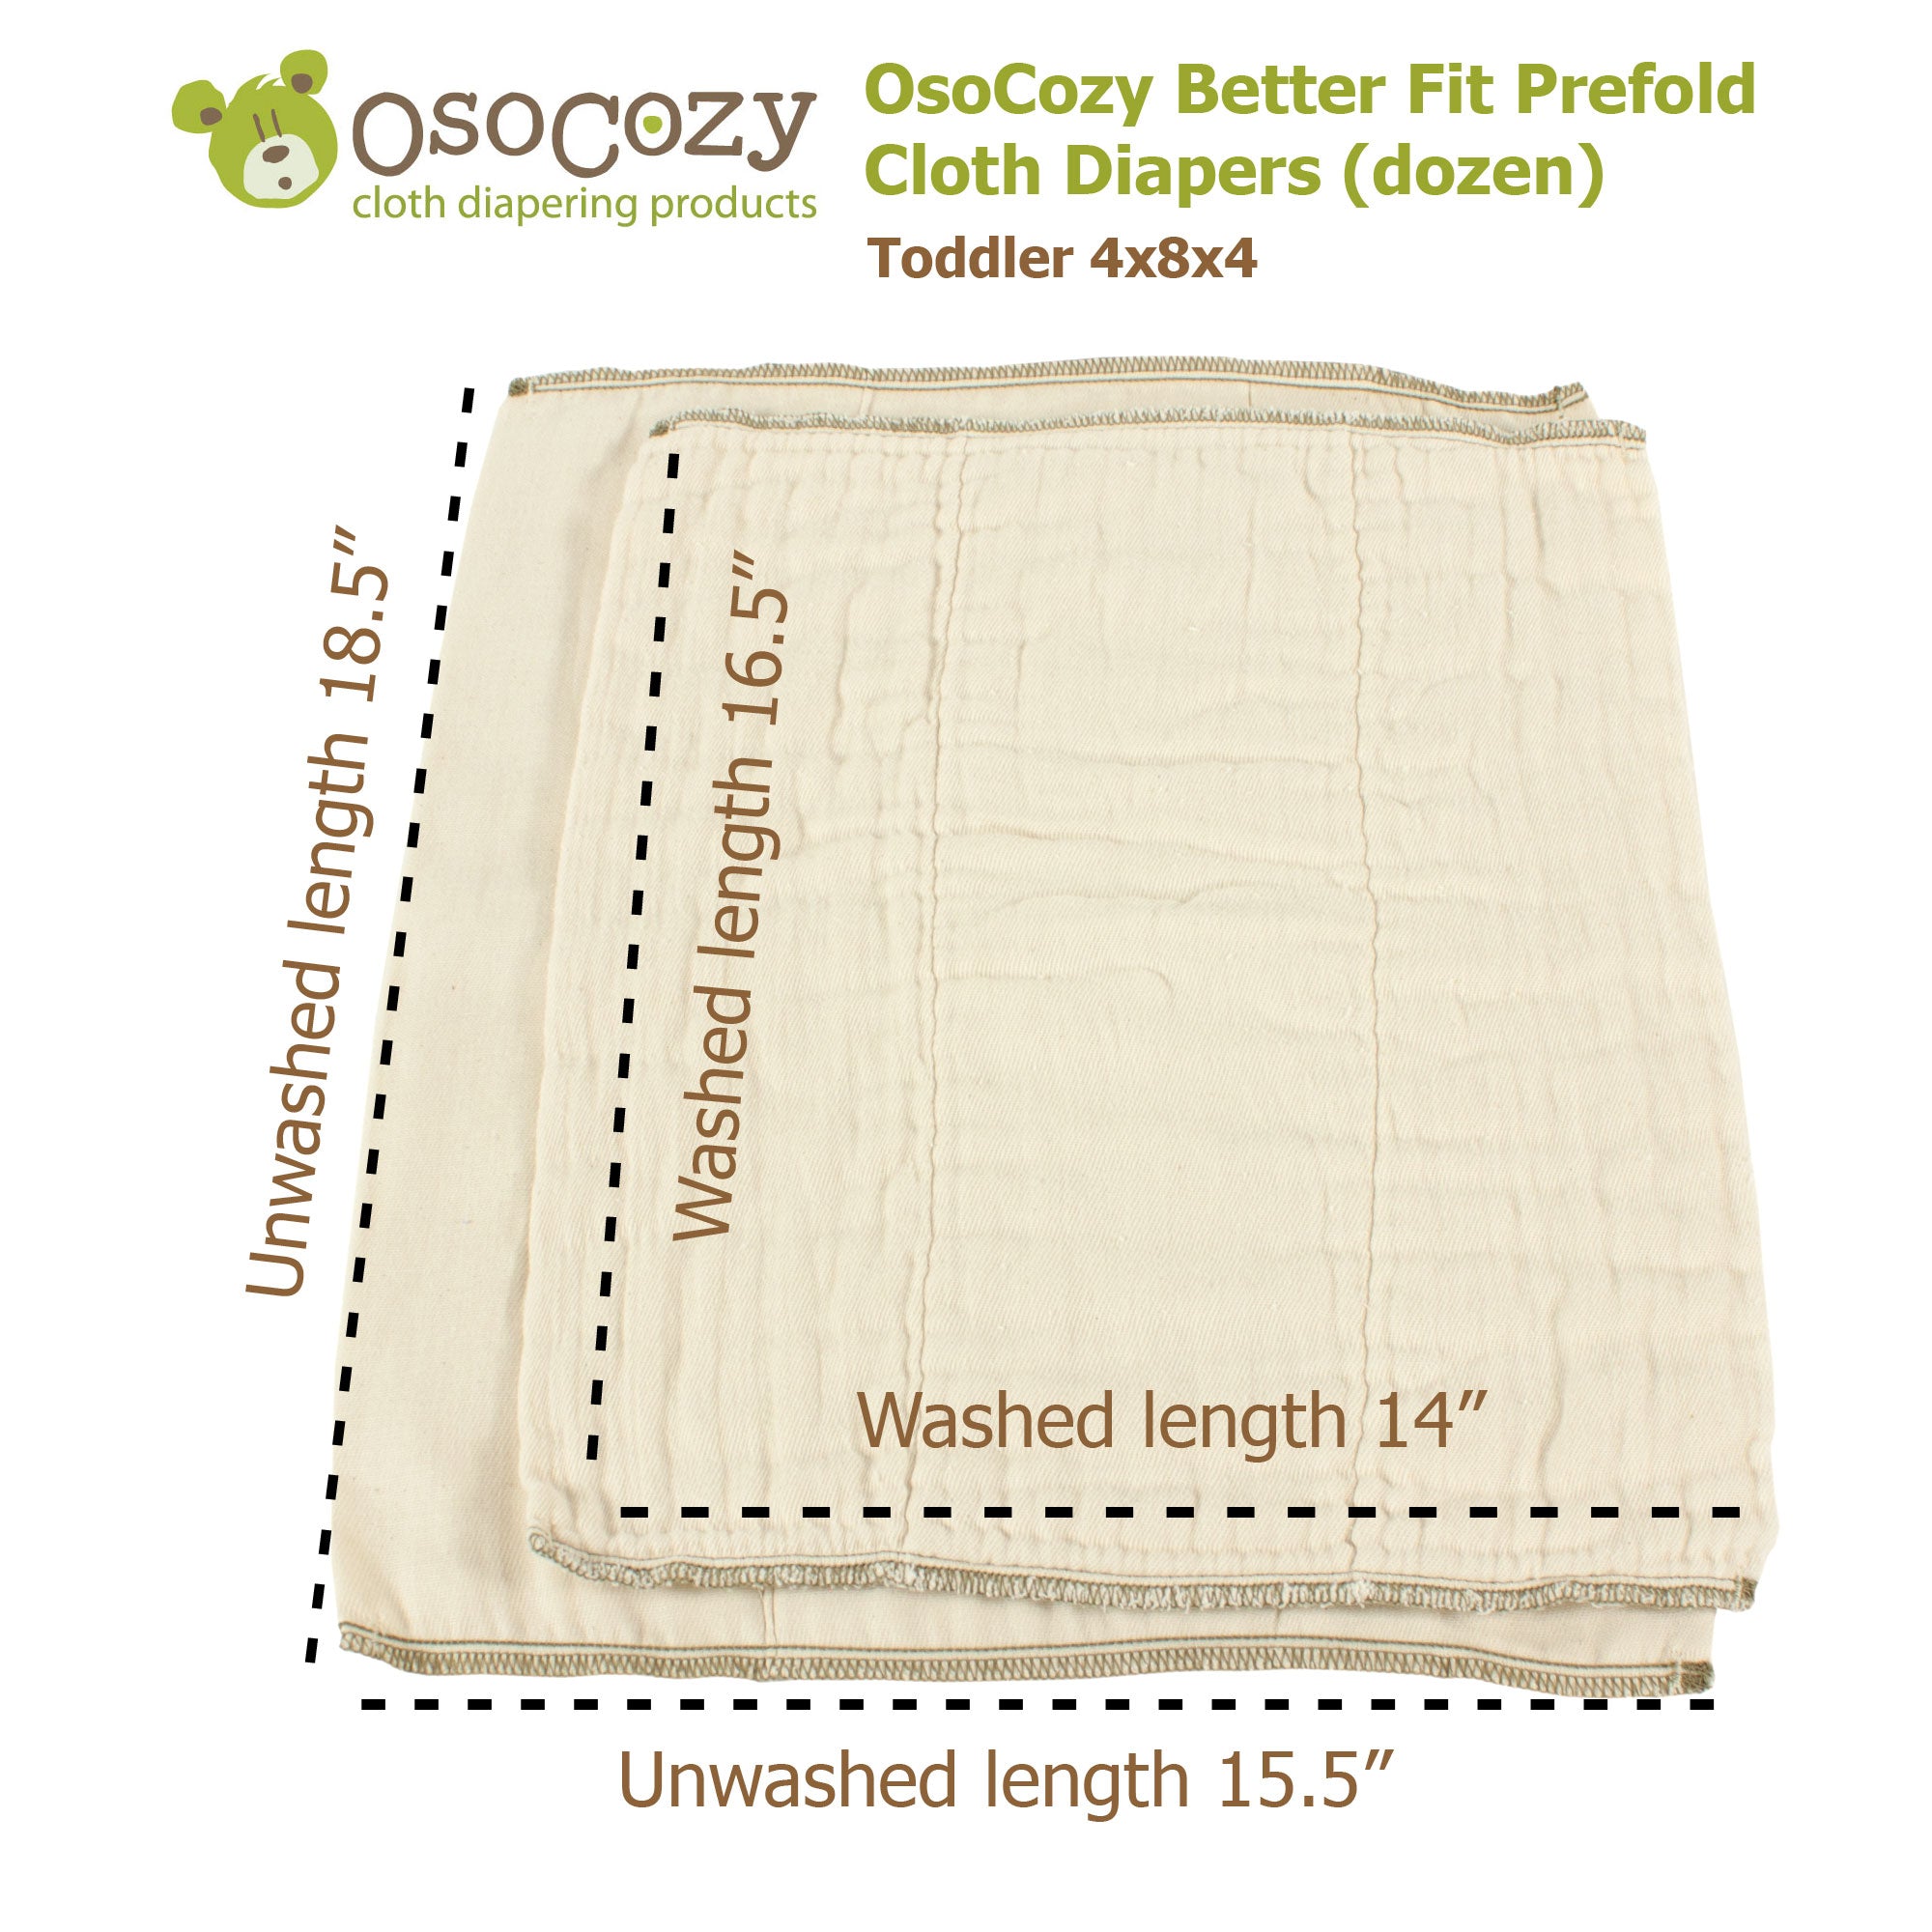 OsoCozy Better Fit Prefold Cloth Diapers (dozen)